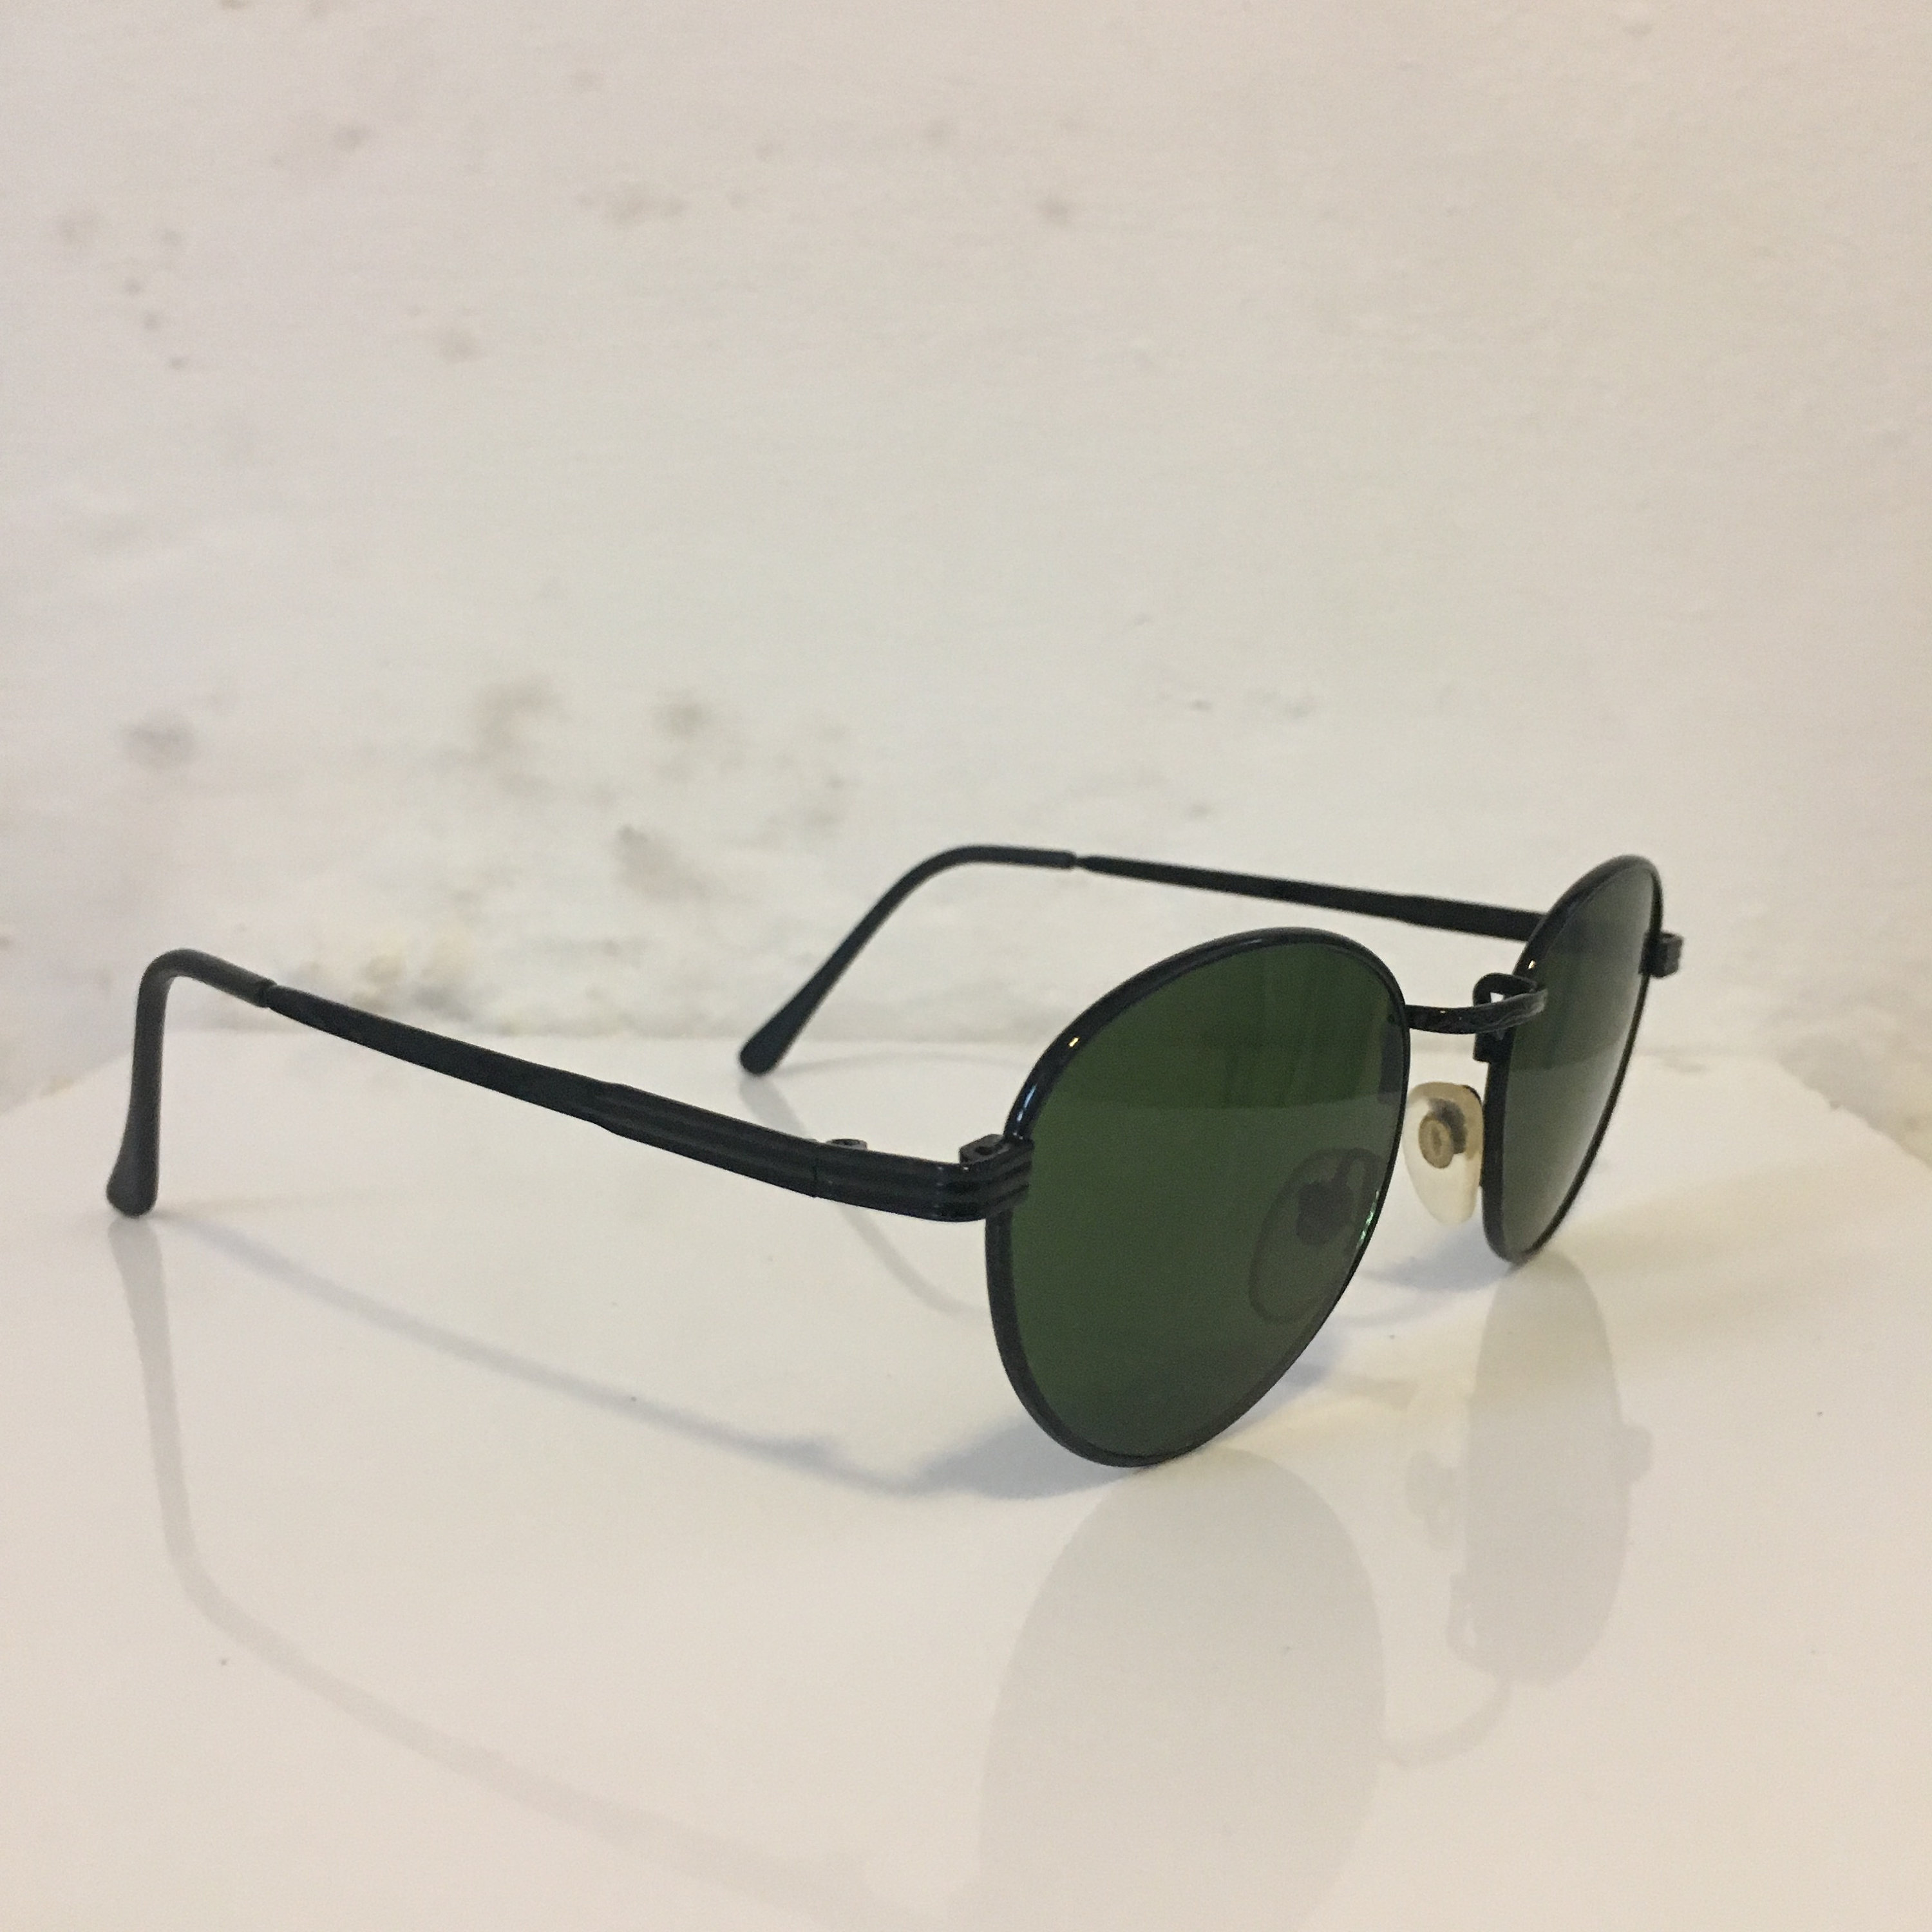 Retro Sonnenbrille rund Glasses Hornbrille Lennon Streber braun schwarz 861 